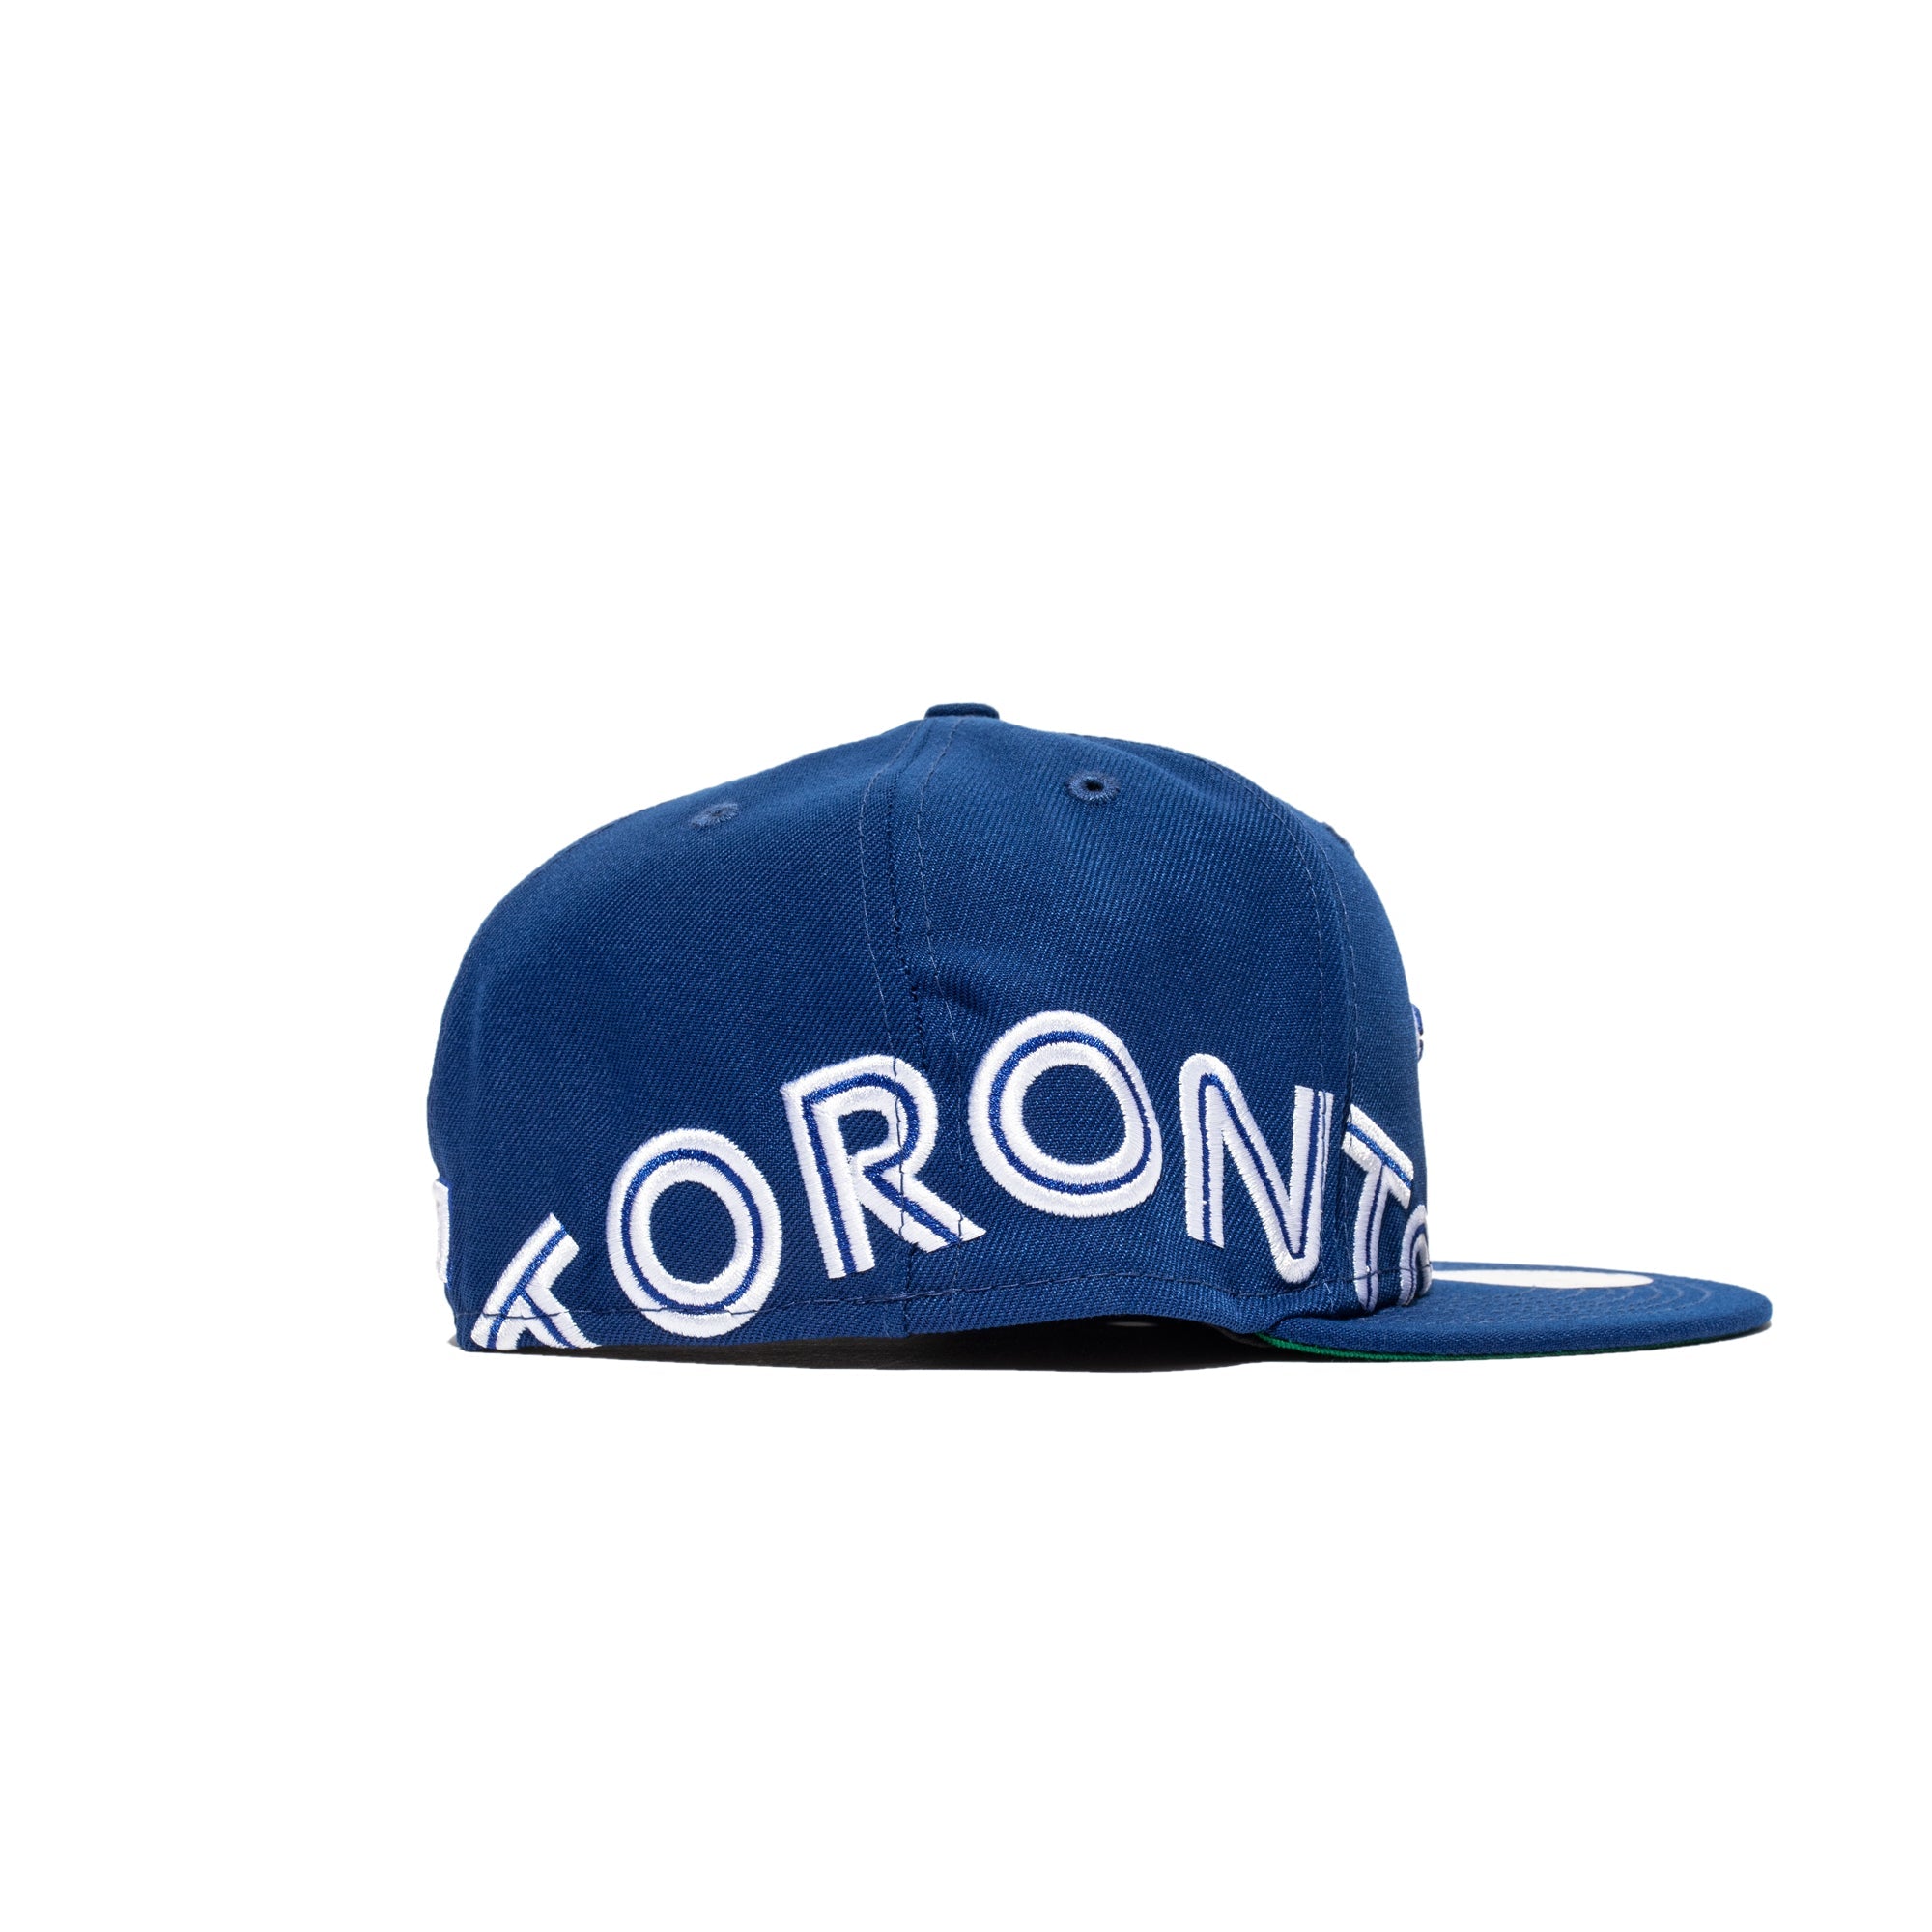 New Era Side Split 59FIFTY Toronto Blue Jays Fitted Hat